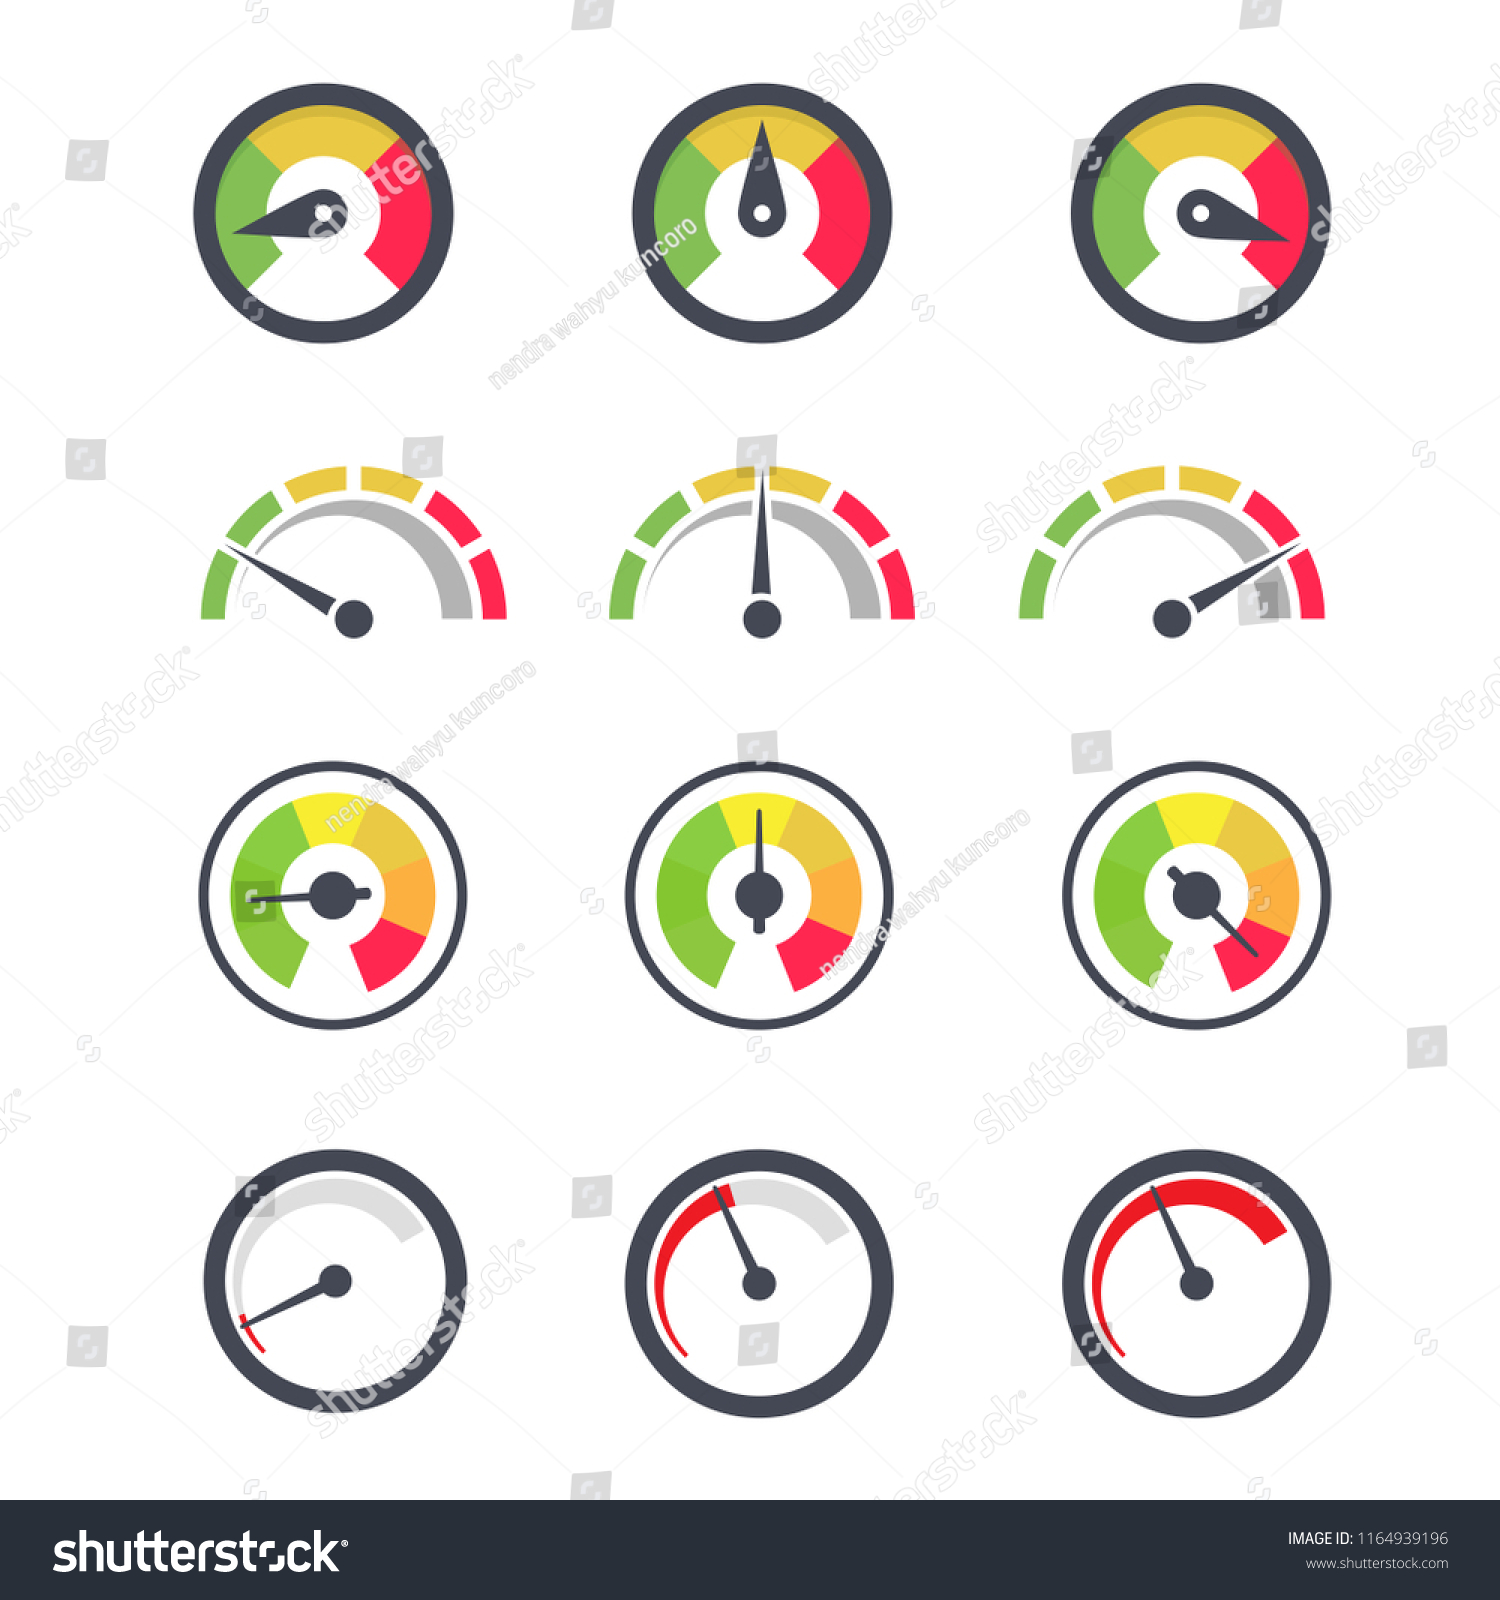 SVG of Speedometer icon, circular indicator of minimum and maximum gauge with various needle pointer svg